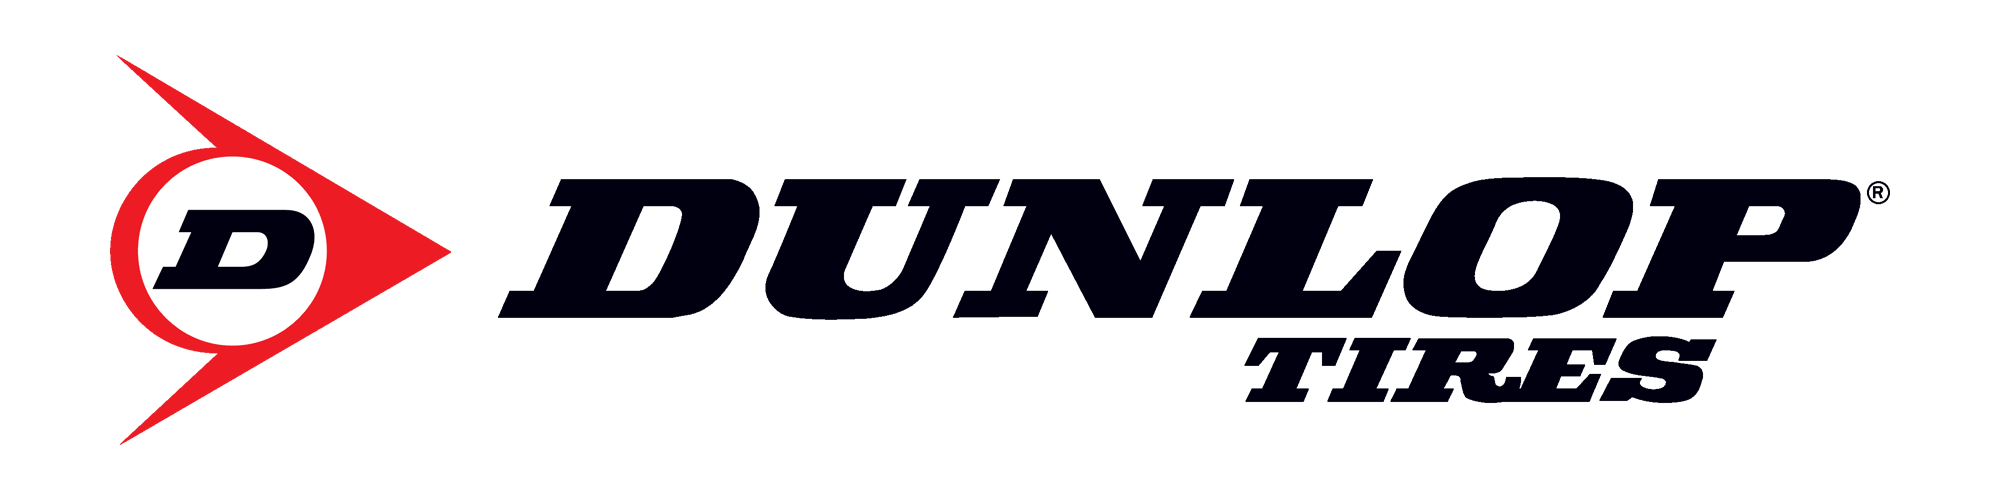 Dunlop-logo-2200x500.png